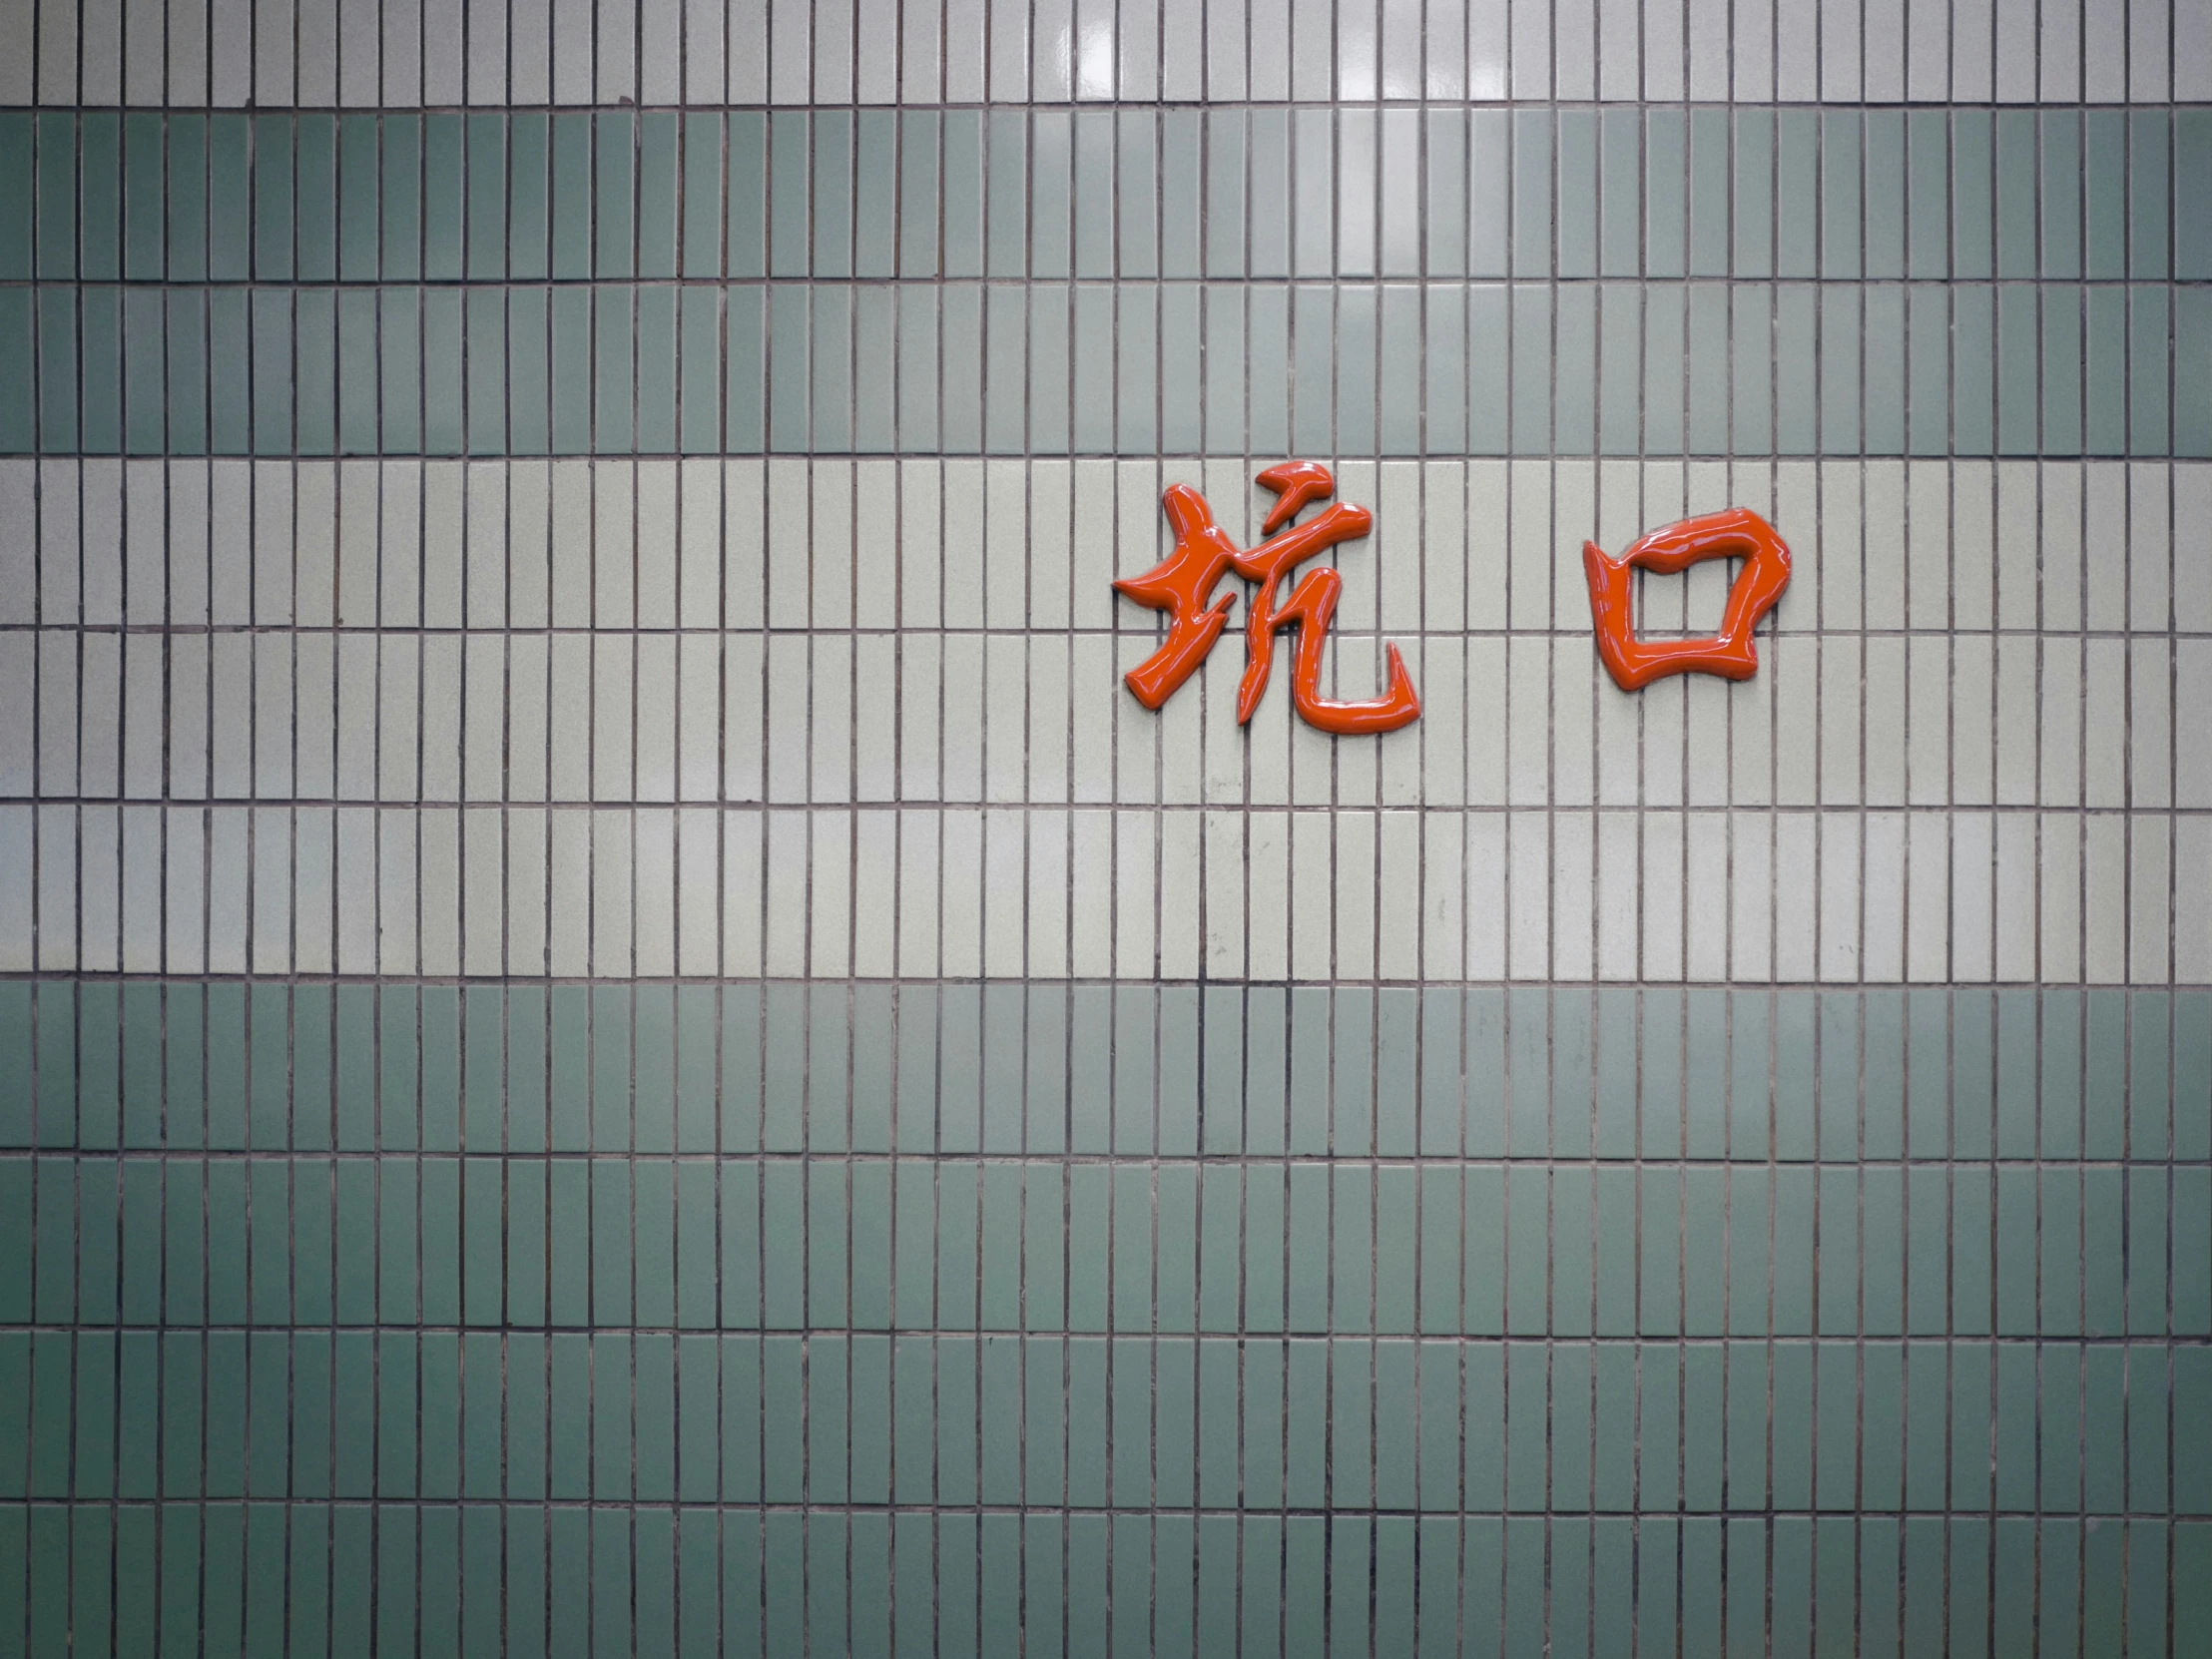 an oriental language sign is written in a bathroom